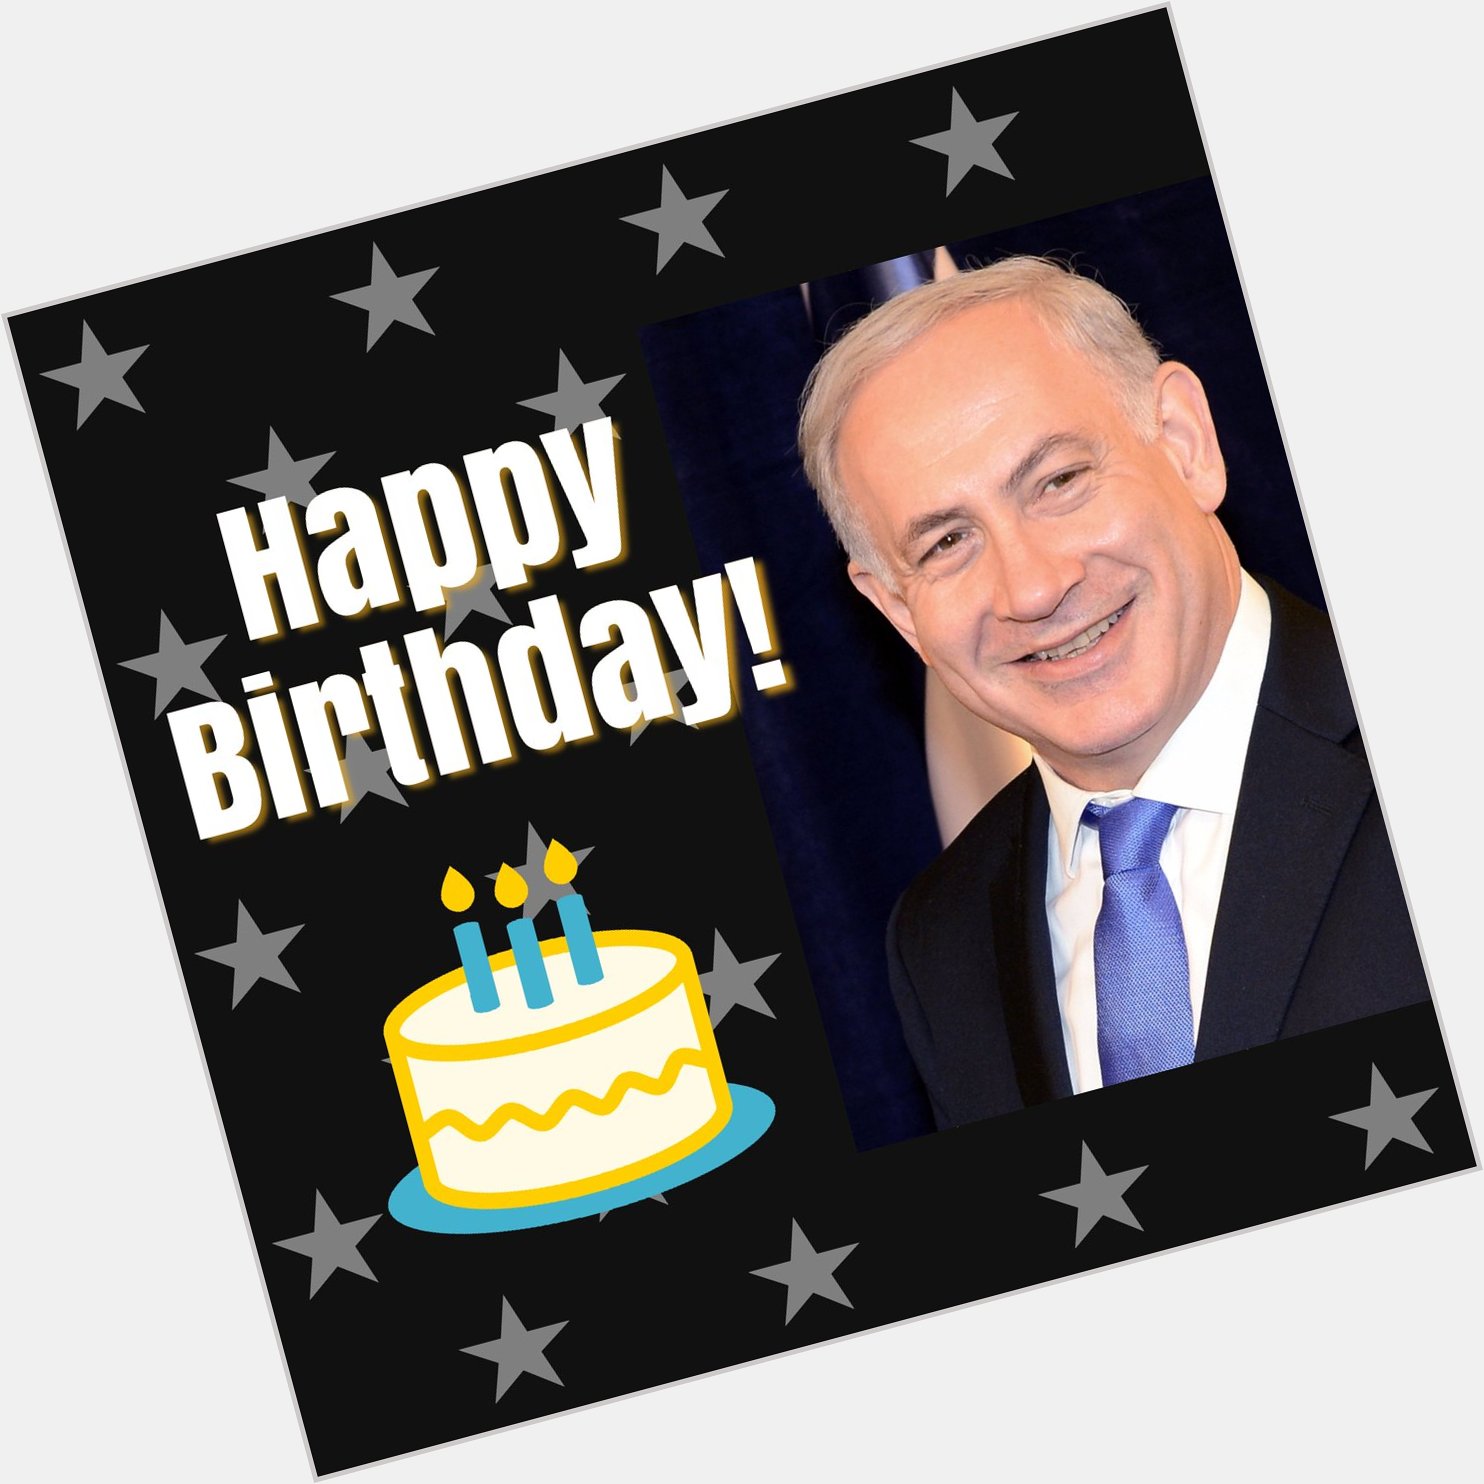 Happy birthday to Prime Minister Benjamin Netanyahu who turned 70 today     